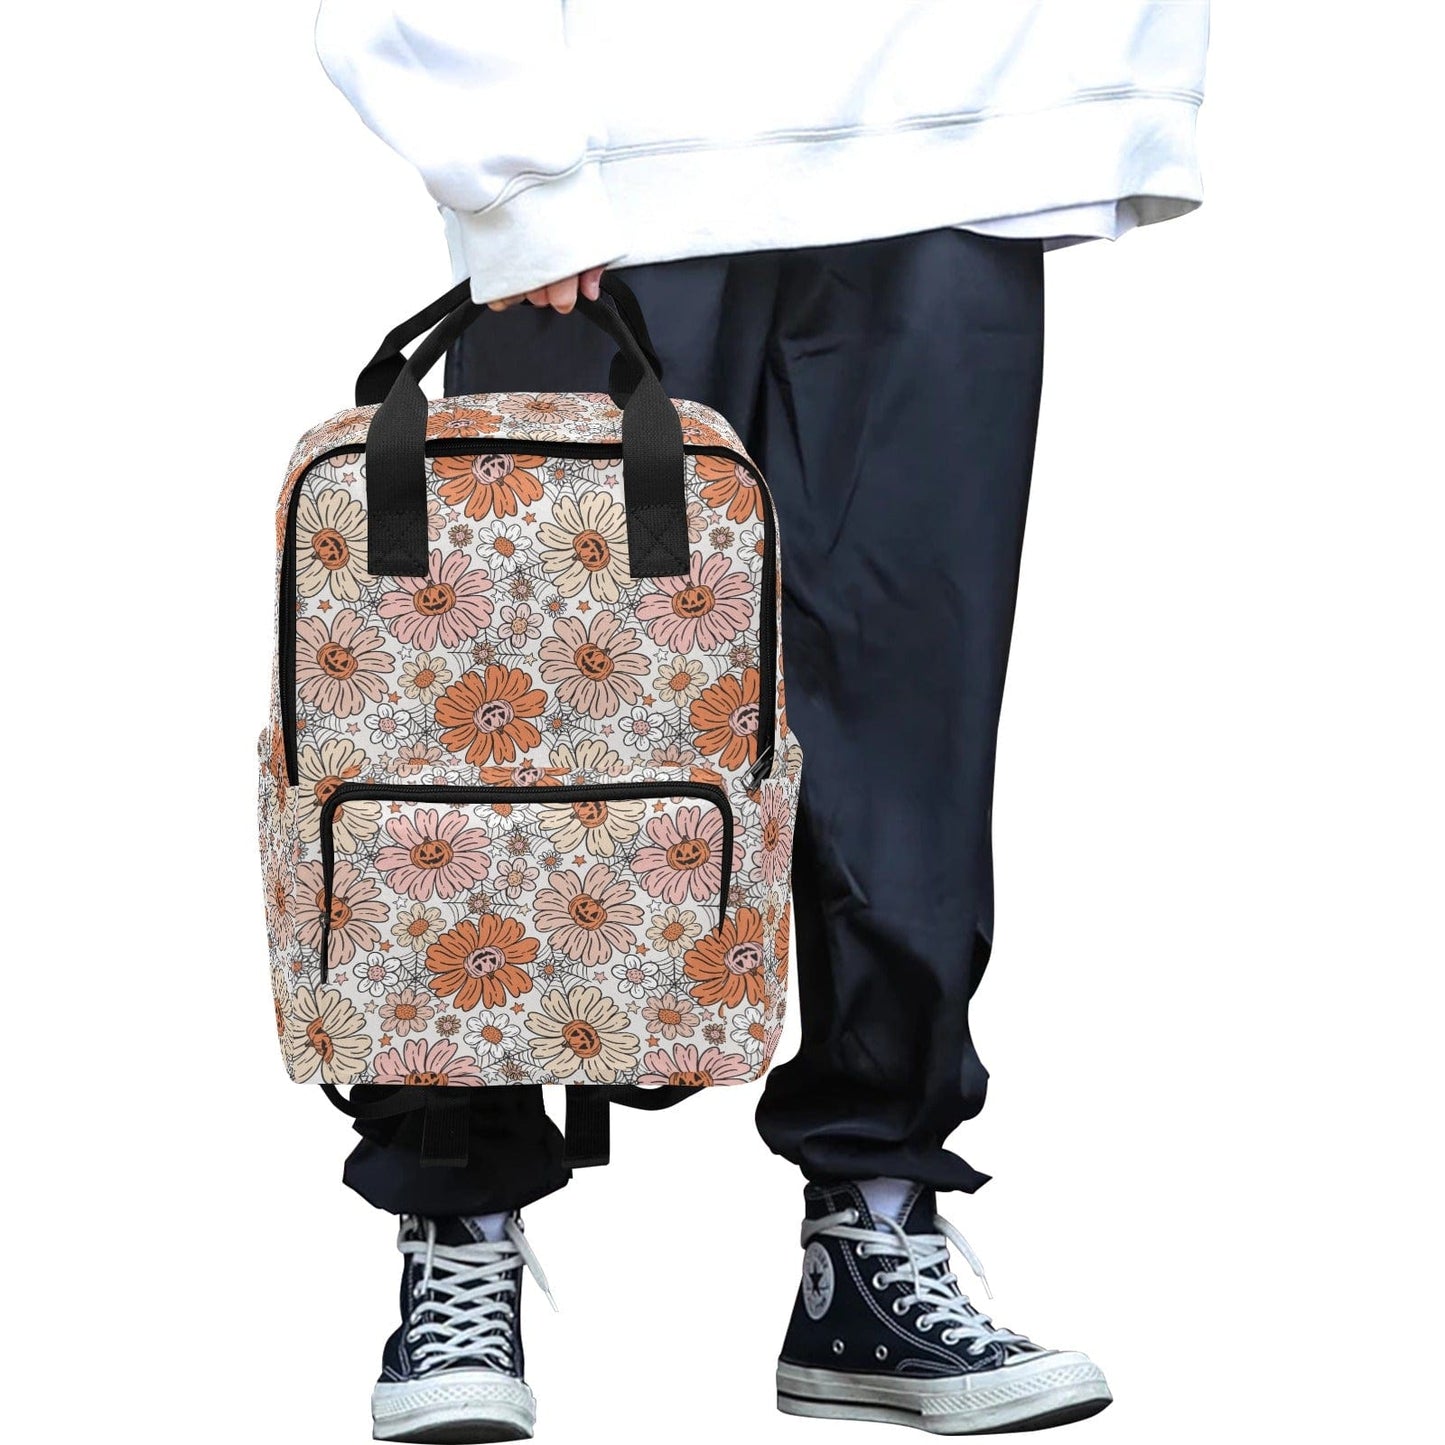 Jack O'Lantern Daisy Double Handle Backpack